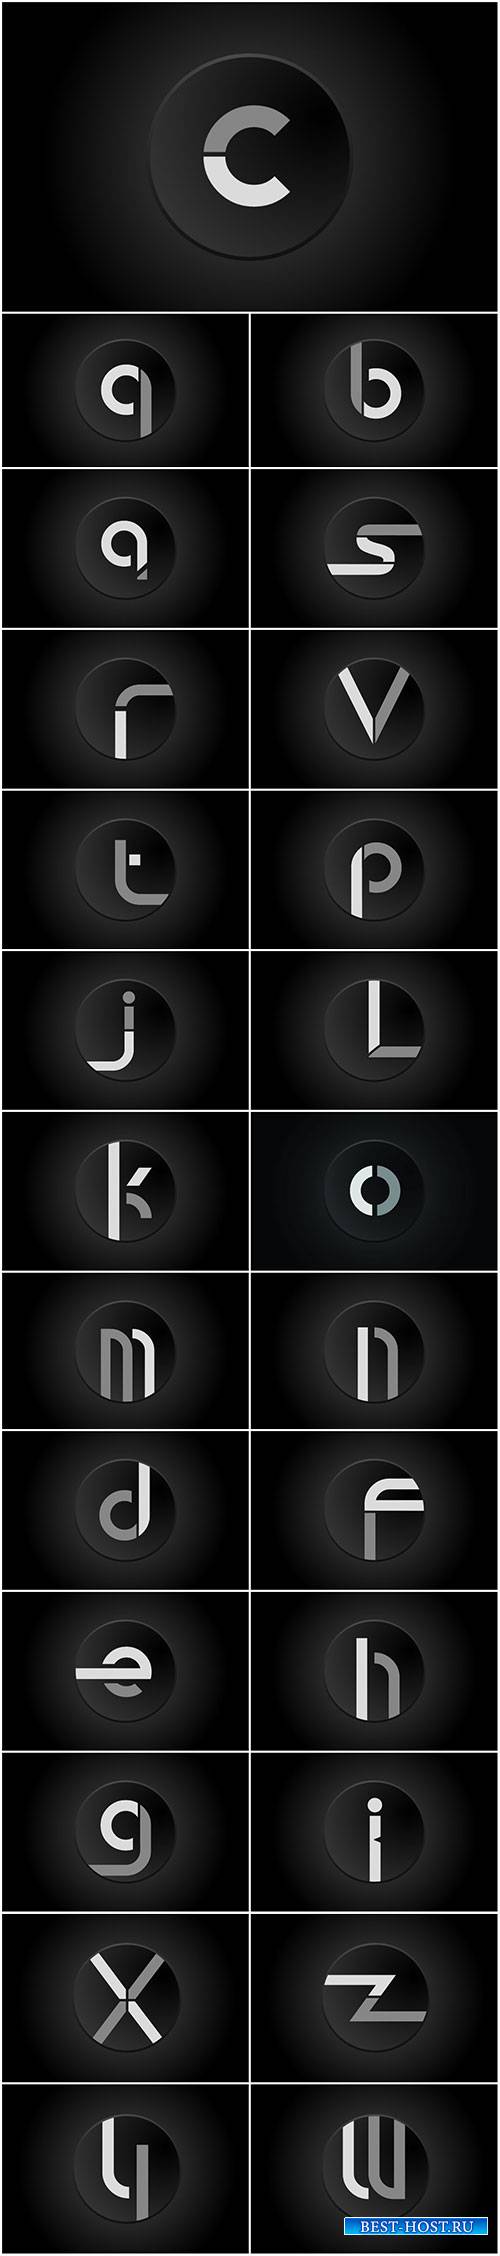 Black and white alphabet letter circle logo icon